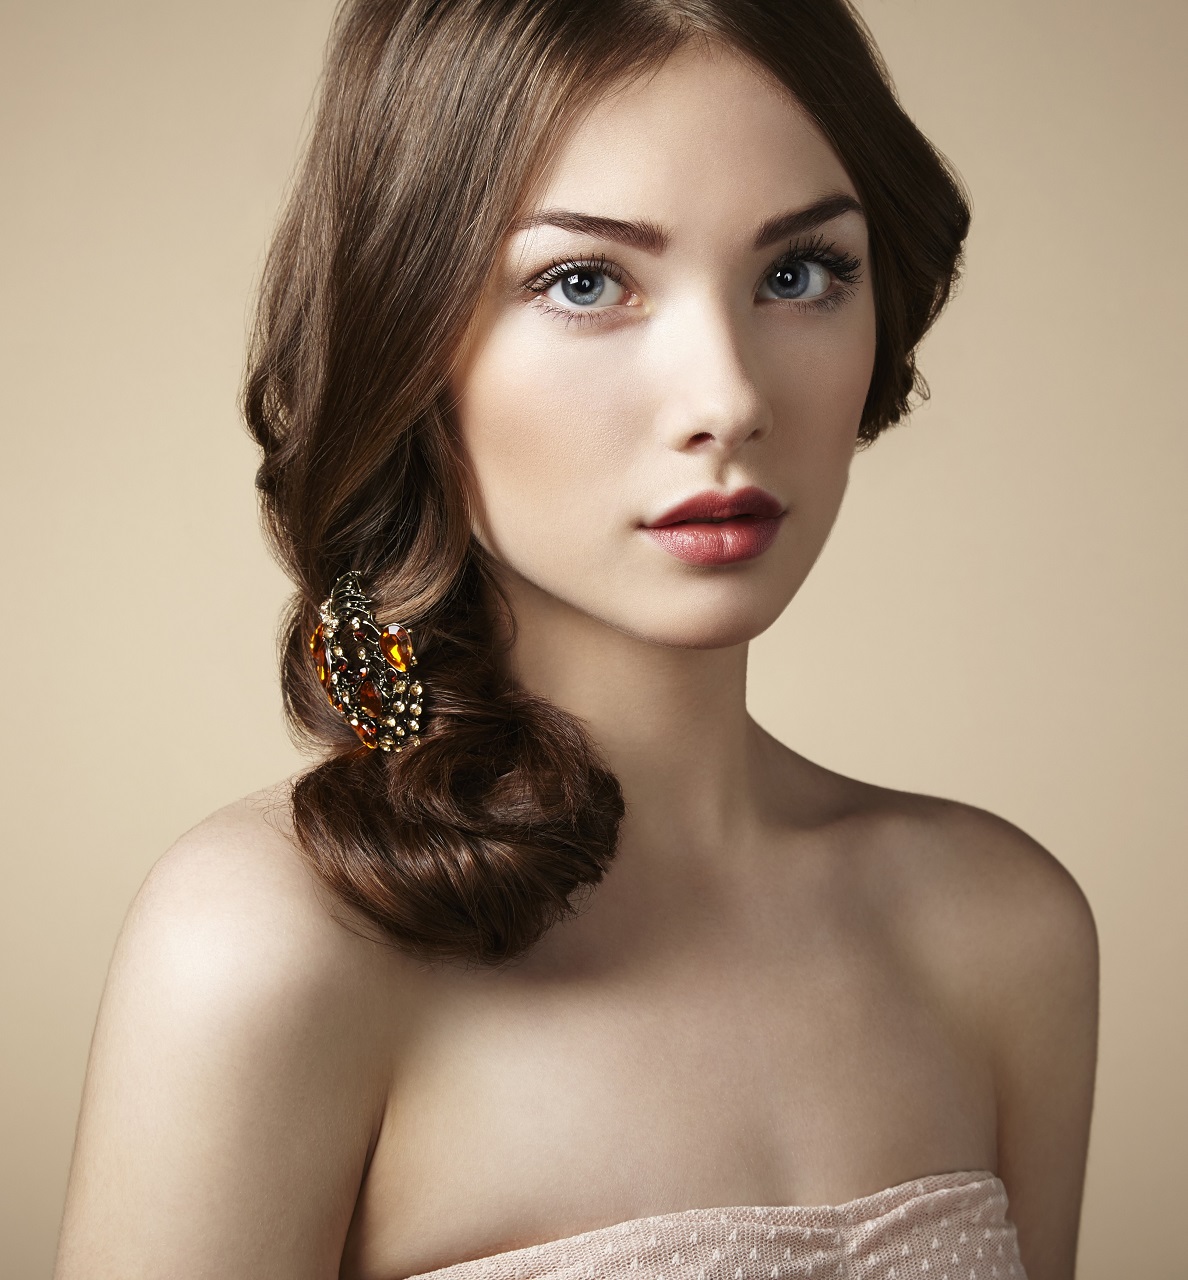 Brunette Hair Women Bare Shoulders Gray Eyes Lipstick Closeup 1188x1280